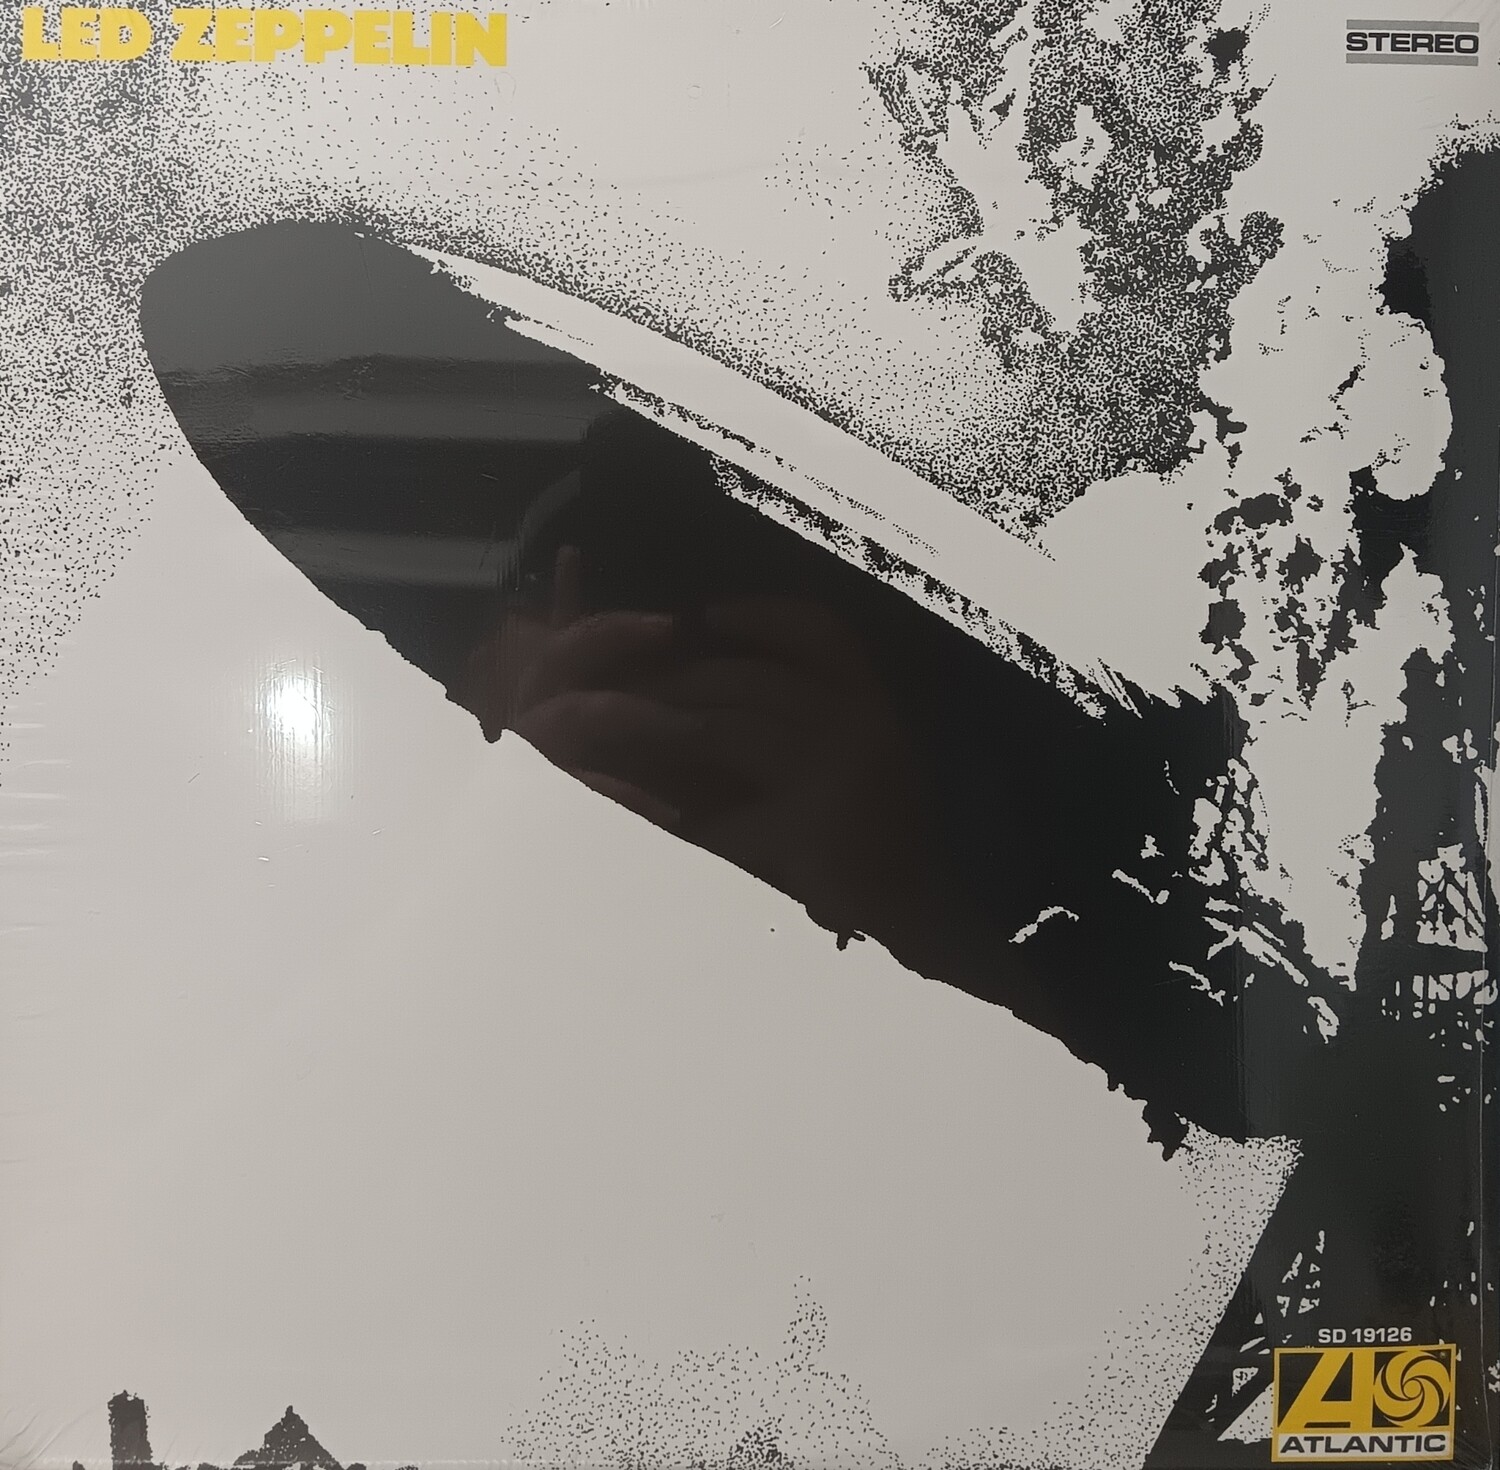 LED ZEPPELIN - Led Zeppelin I (SCELLÉ)